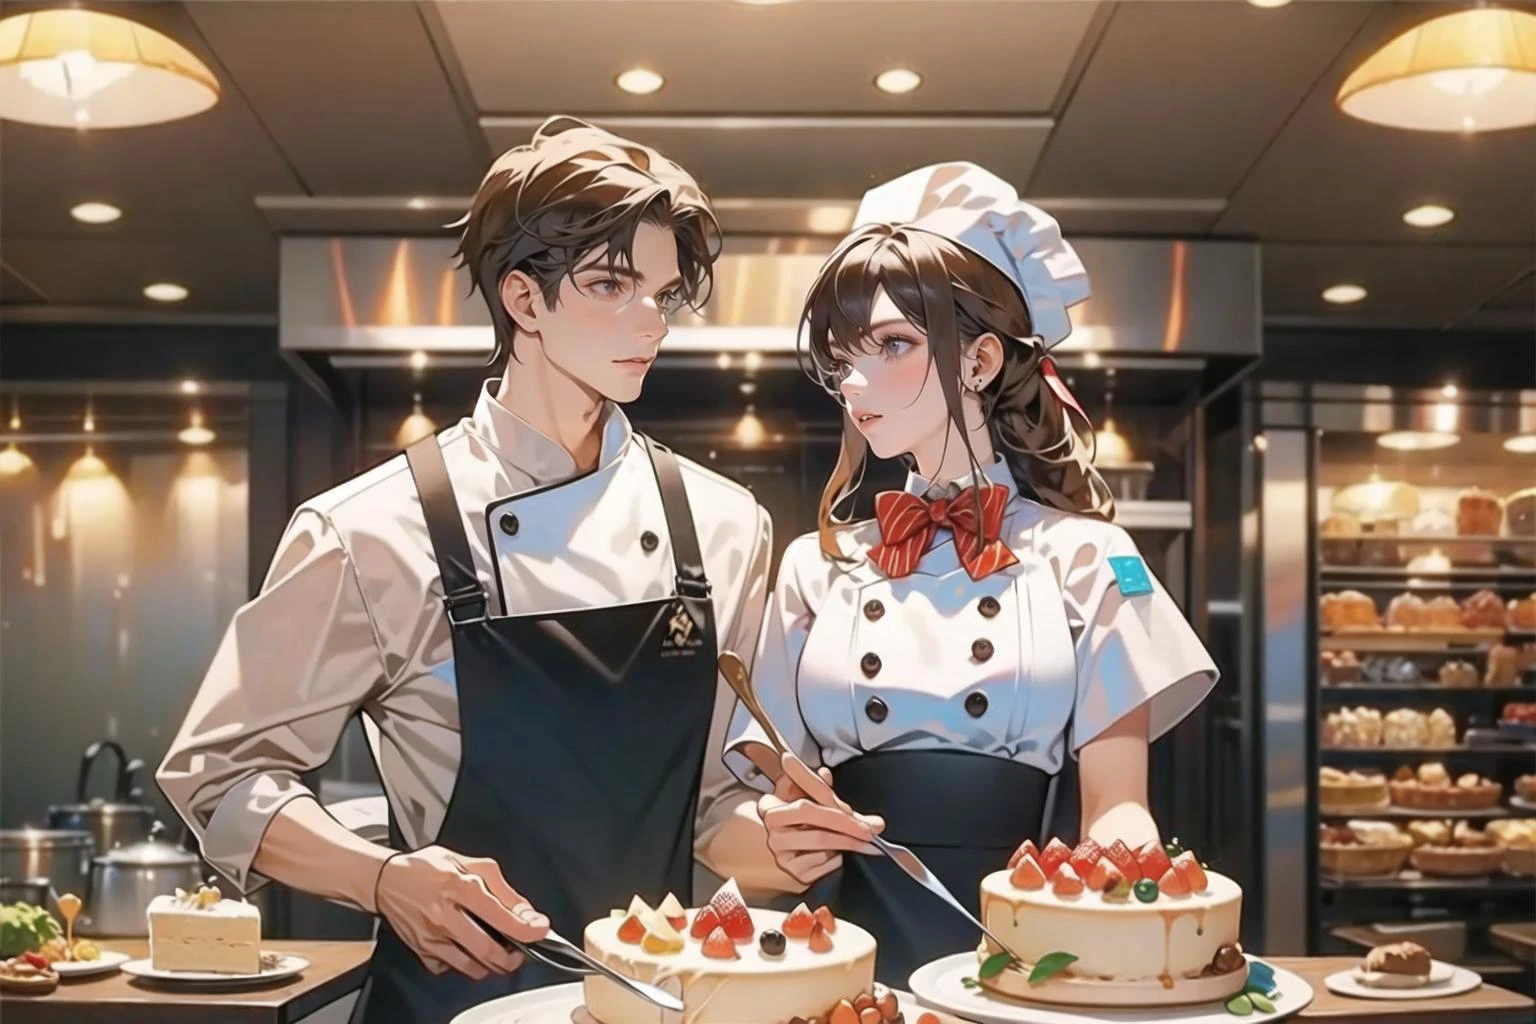 (masterpiece:1.2),(masterpiece, top quality, best quality)
1 girl, 1 boy, 2 people, chef, Chef hat, kitchen, pastry, cake, cream, dessert, food,chef uniform, chef, kirochef, 
